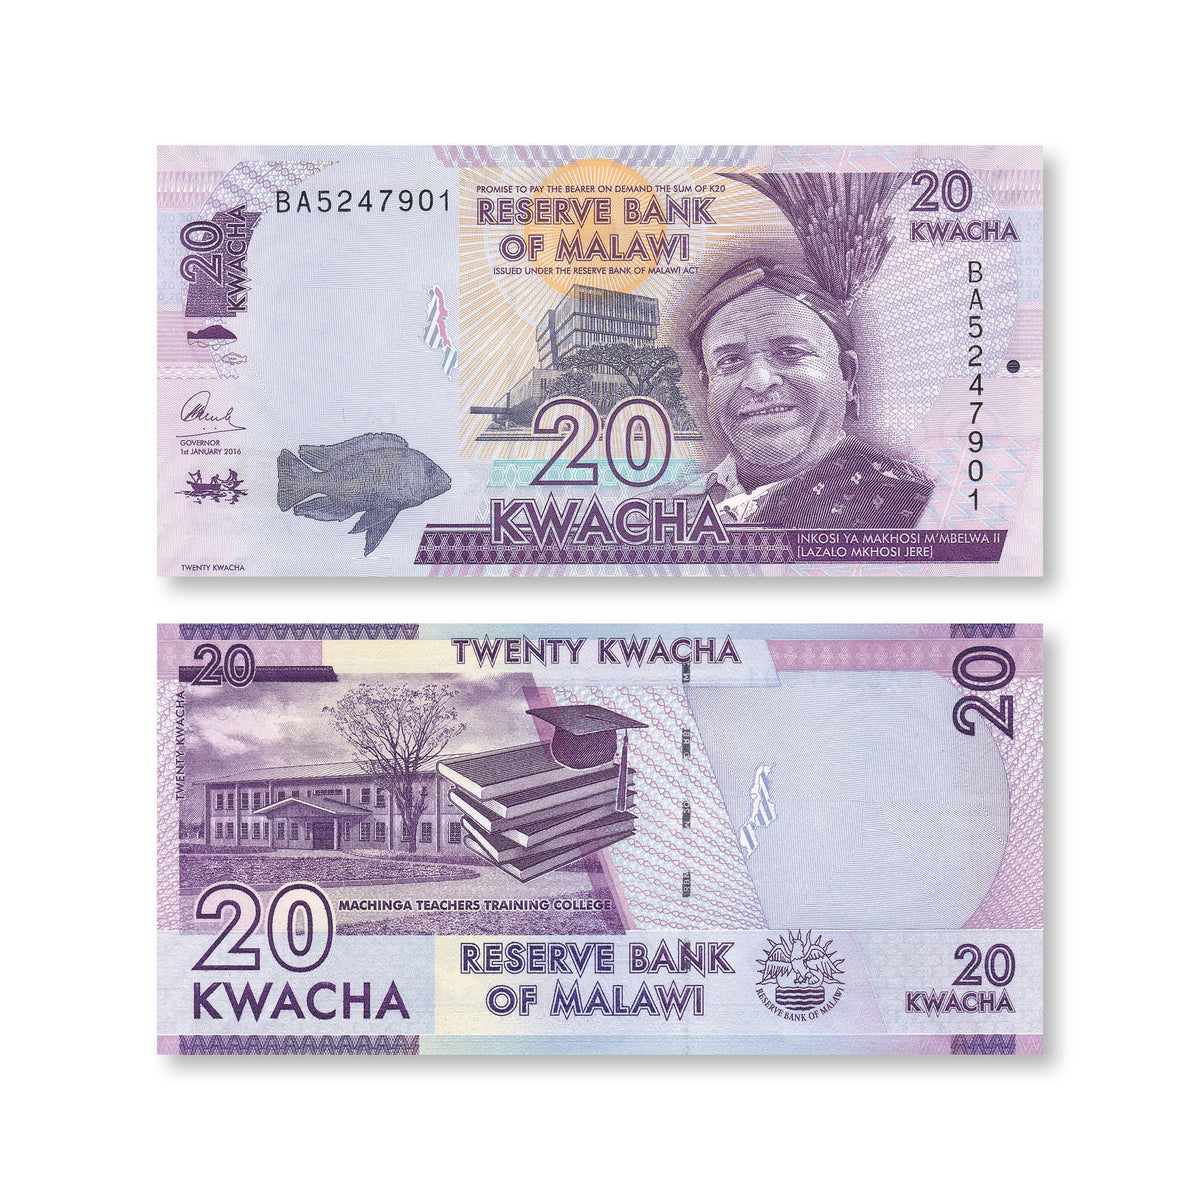 Malawi 20 Kwacha, 2016, B157c, P63c, UNC - Robert's World Money - World Banknotes